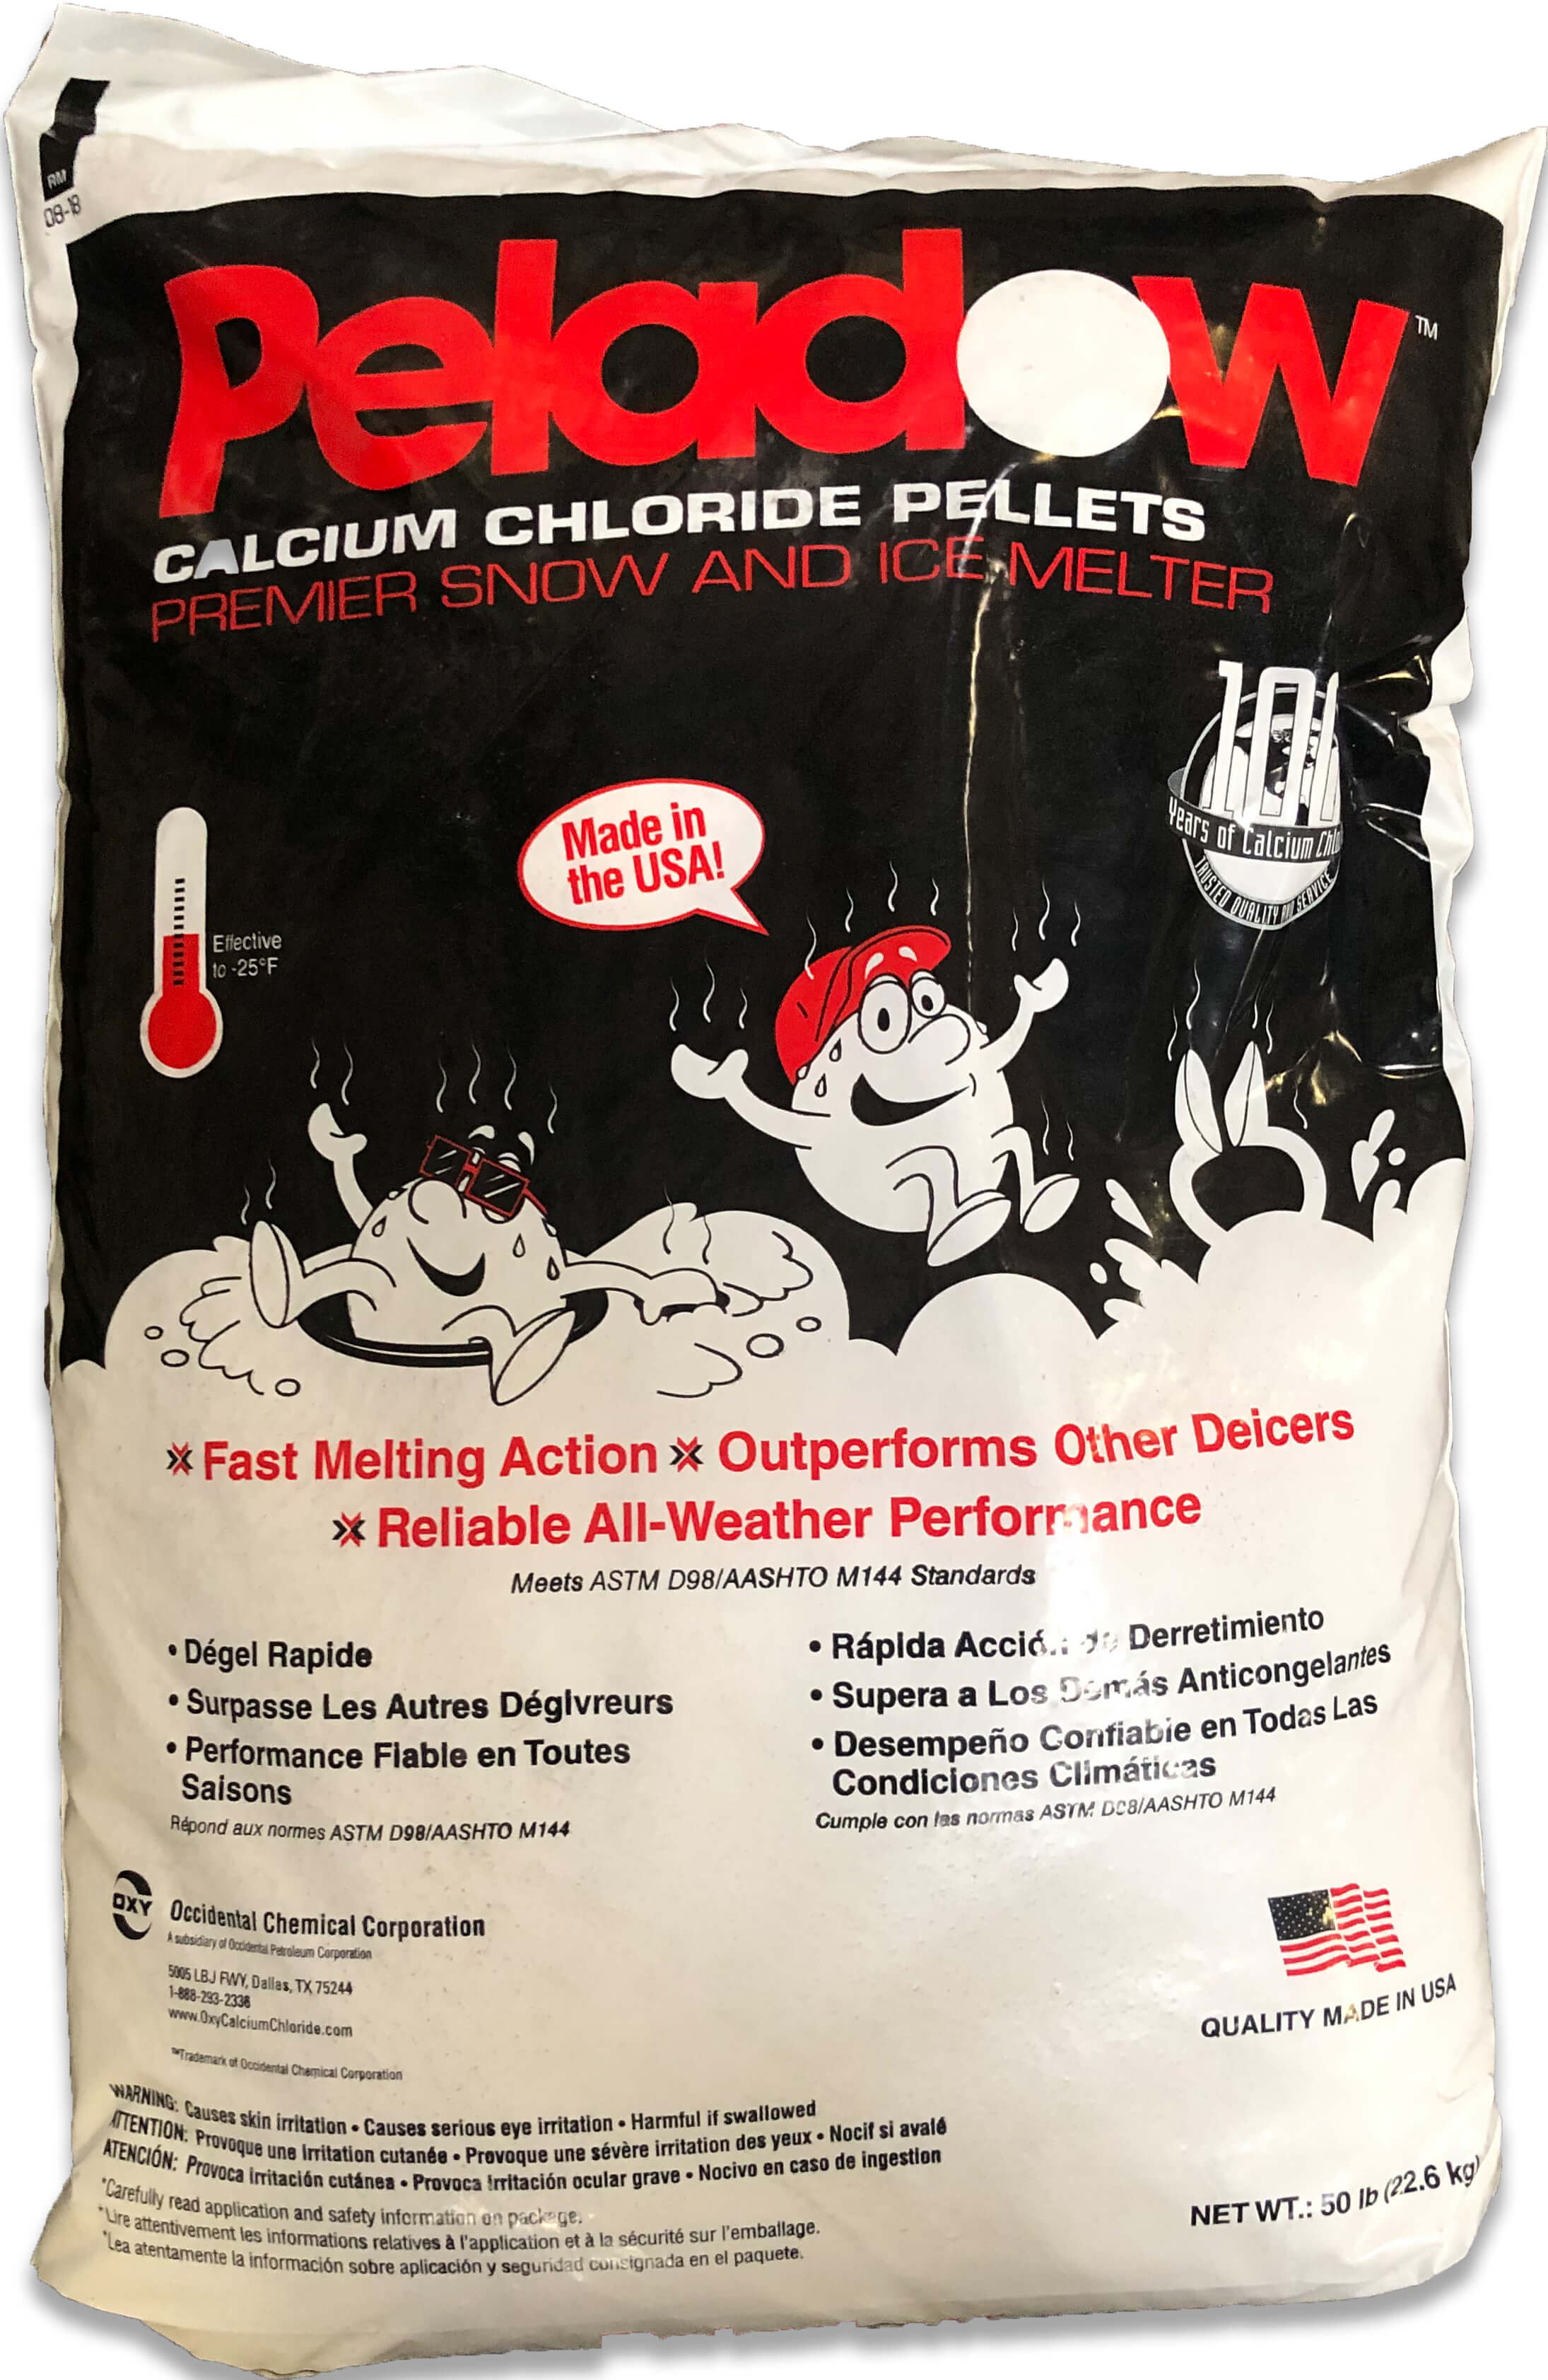 peladow 50 calcium chloride pellets